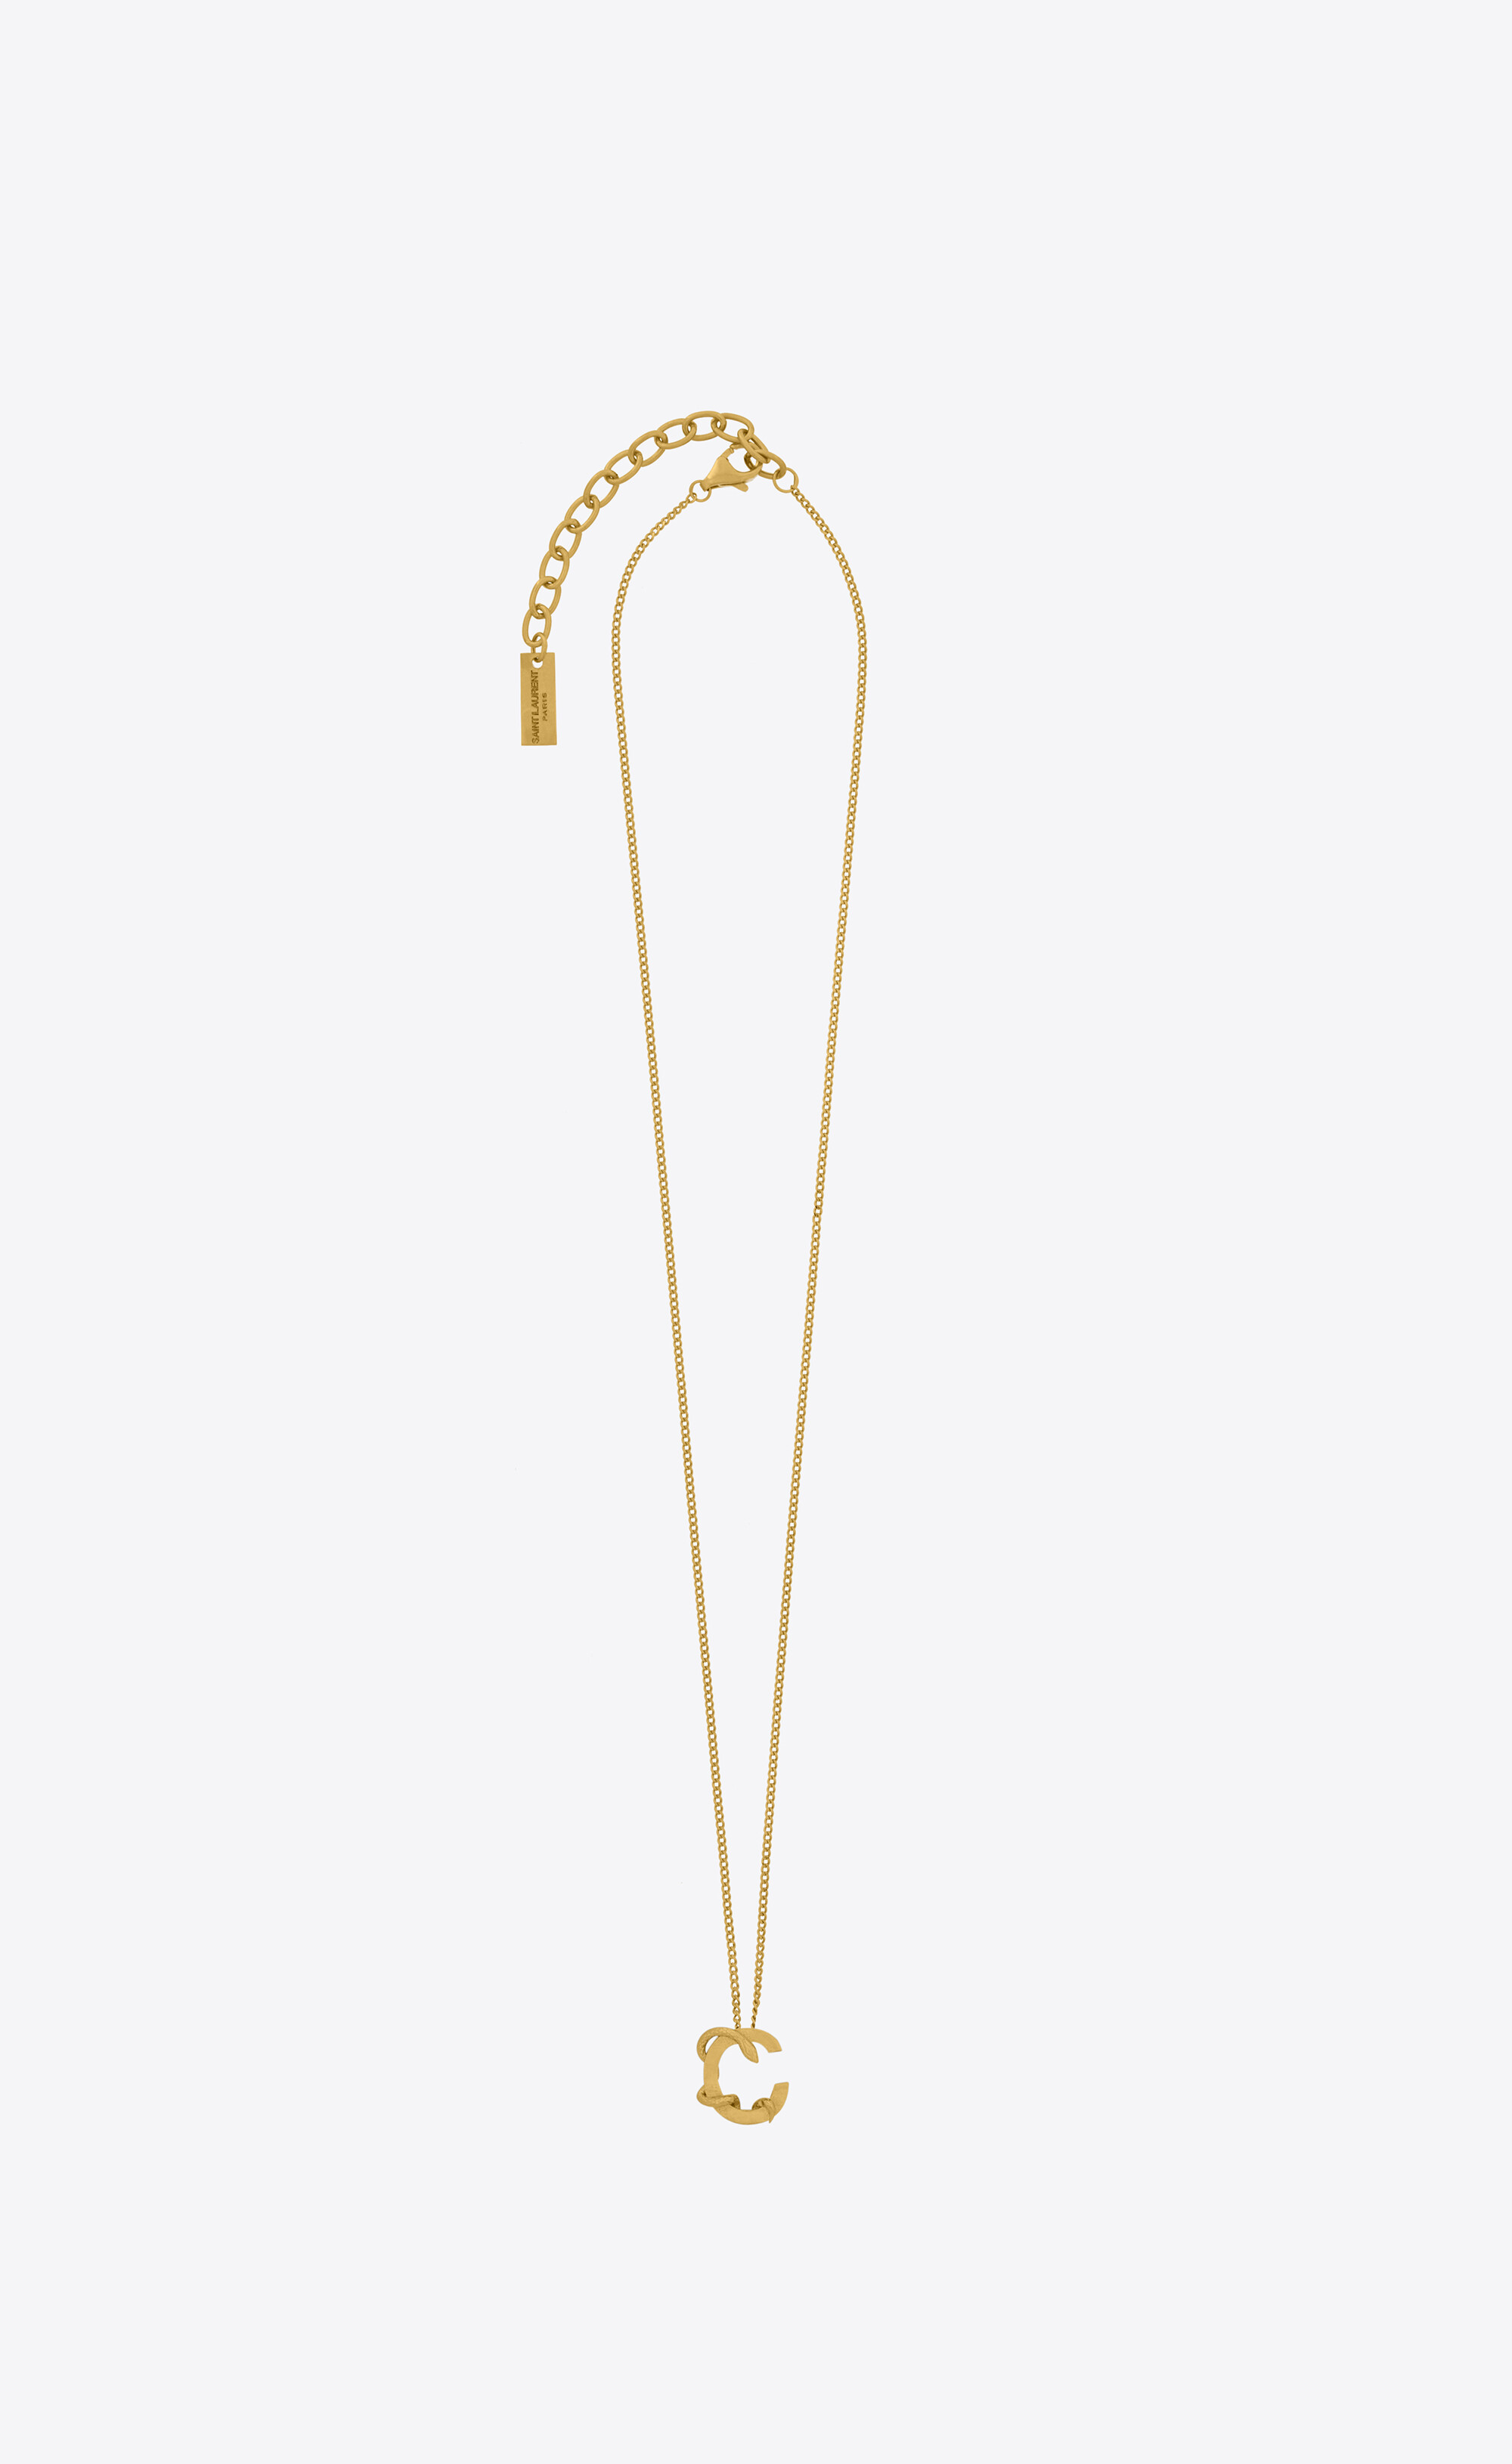 Letter c pendant necklace in 18k gold